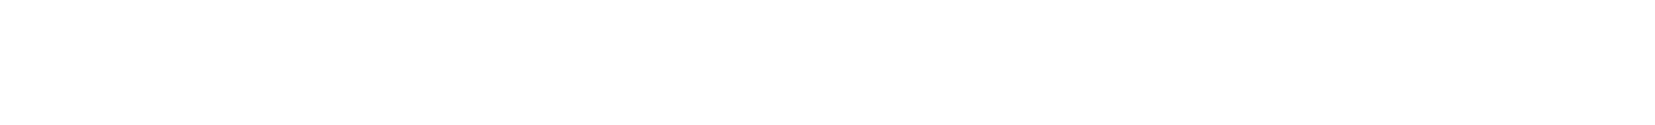 Williams-Sonoma logo large for dark backgrounds (transparent PNG)